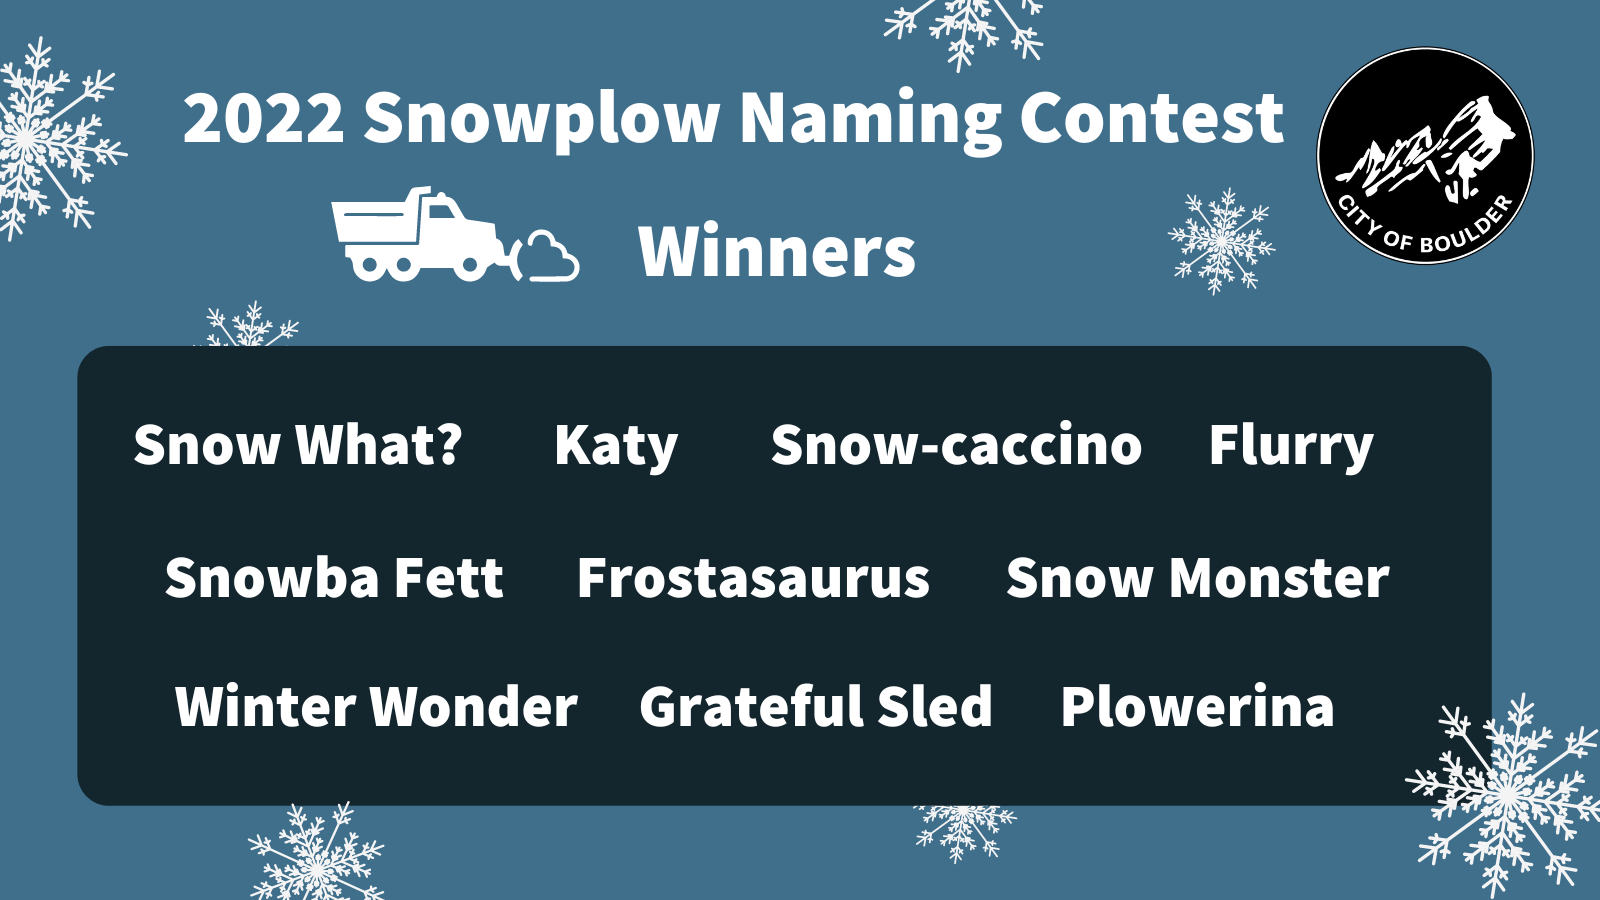 2022 Snowplow Naming Contest Winners